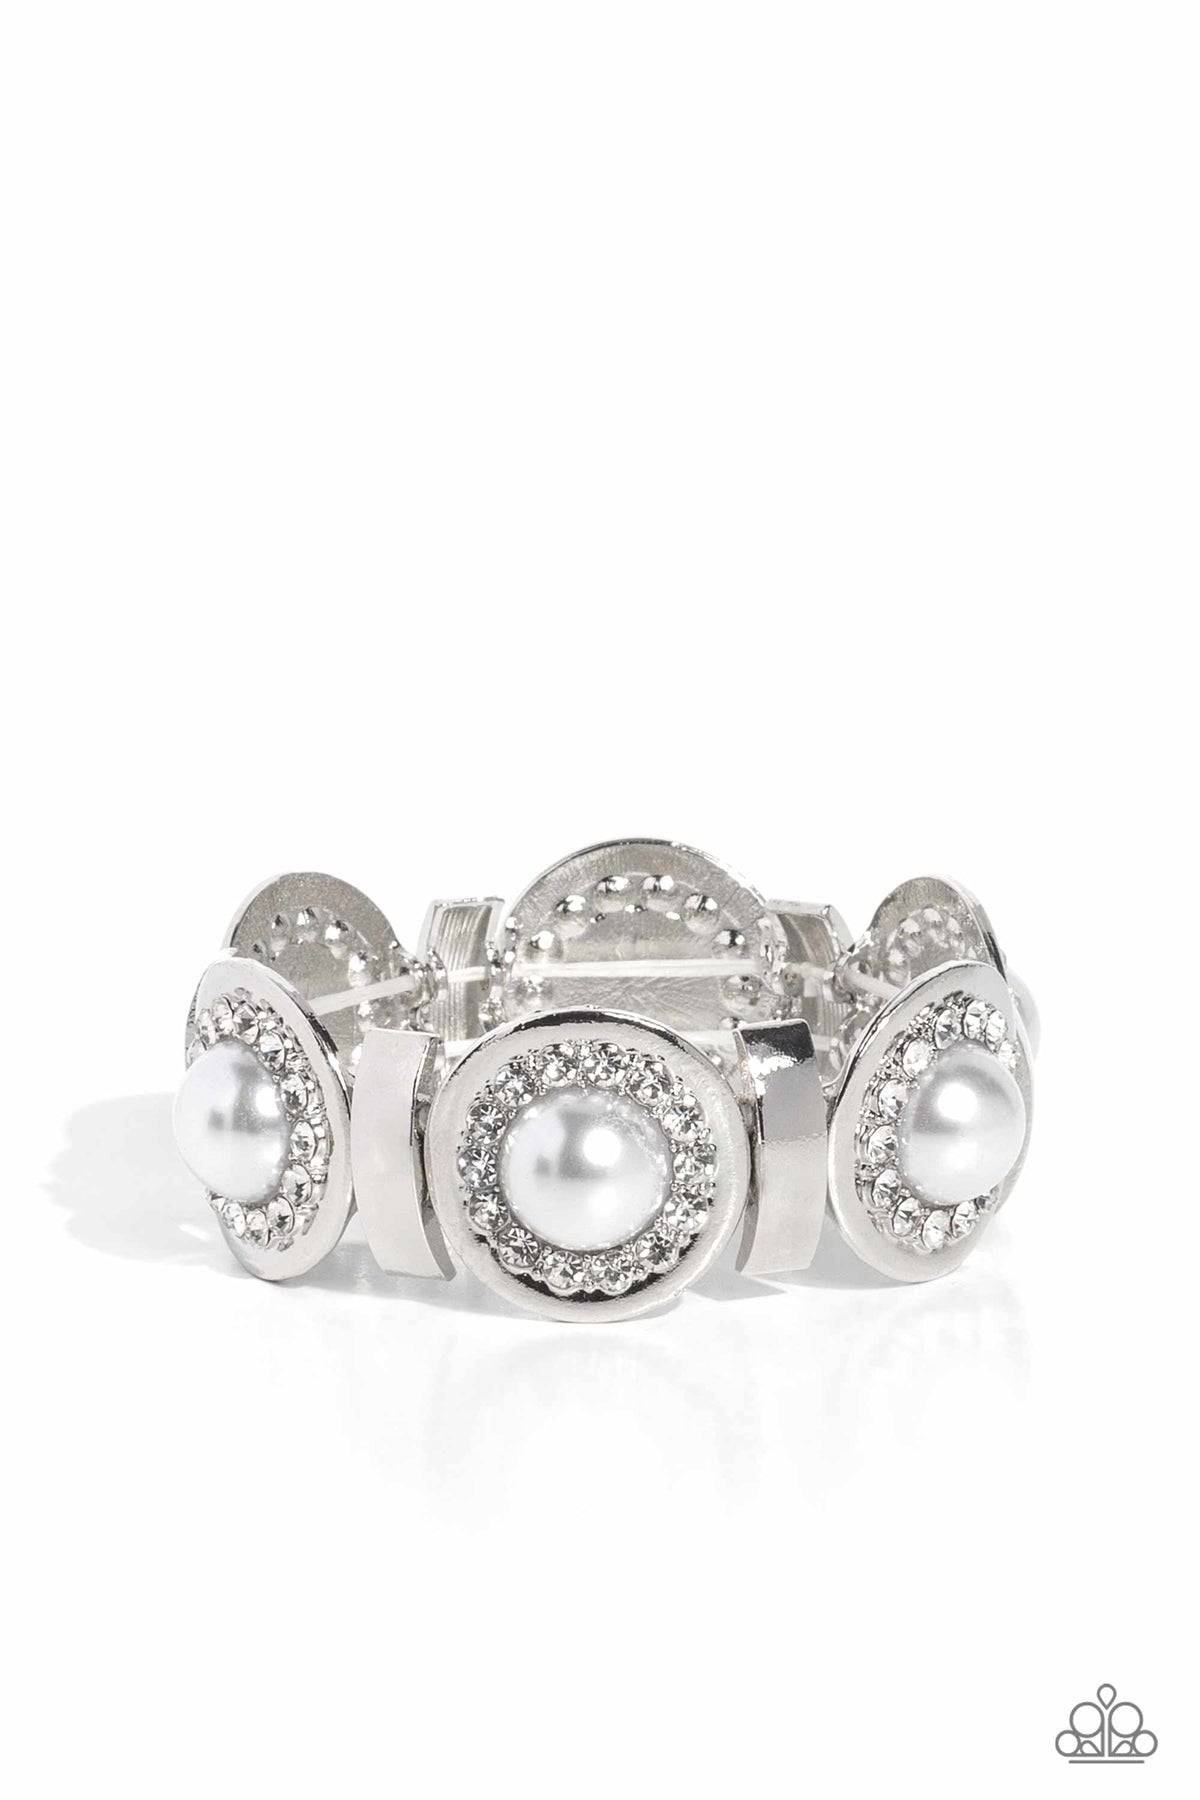 Summer Serenade White Pearl &amp; Rhinestone Bracelet - Paparazzi Accessories- lightbox - CarasShop.com - $5 Jewelry by Cara Jewels